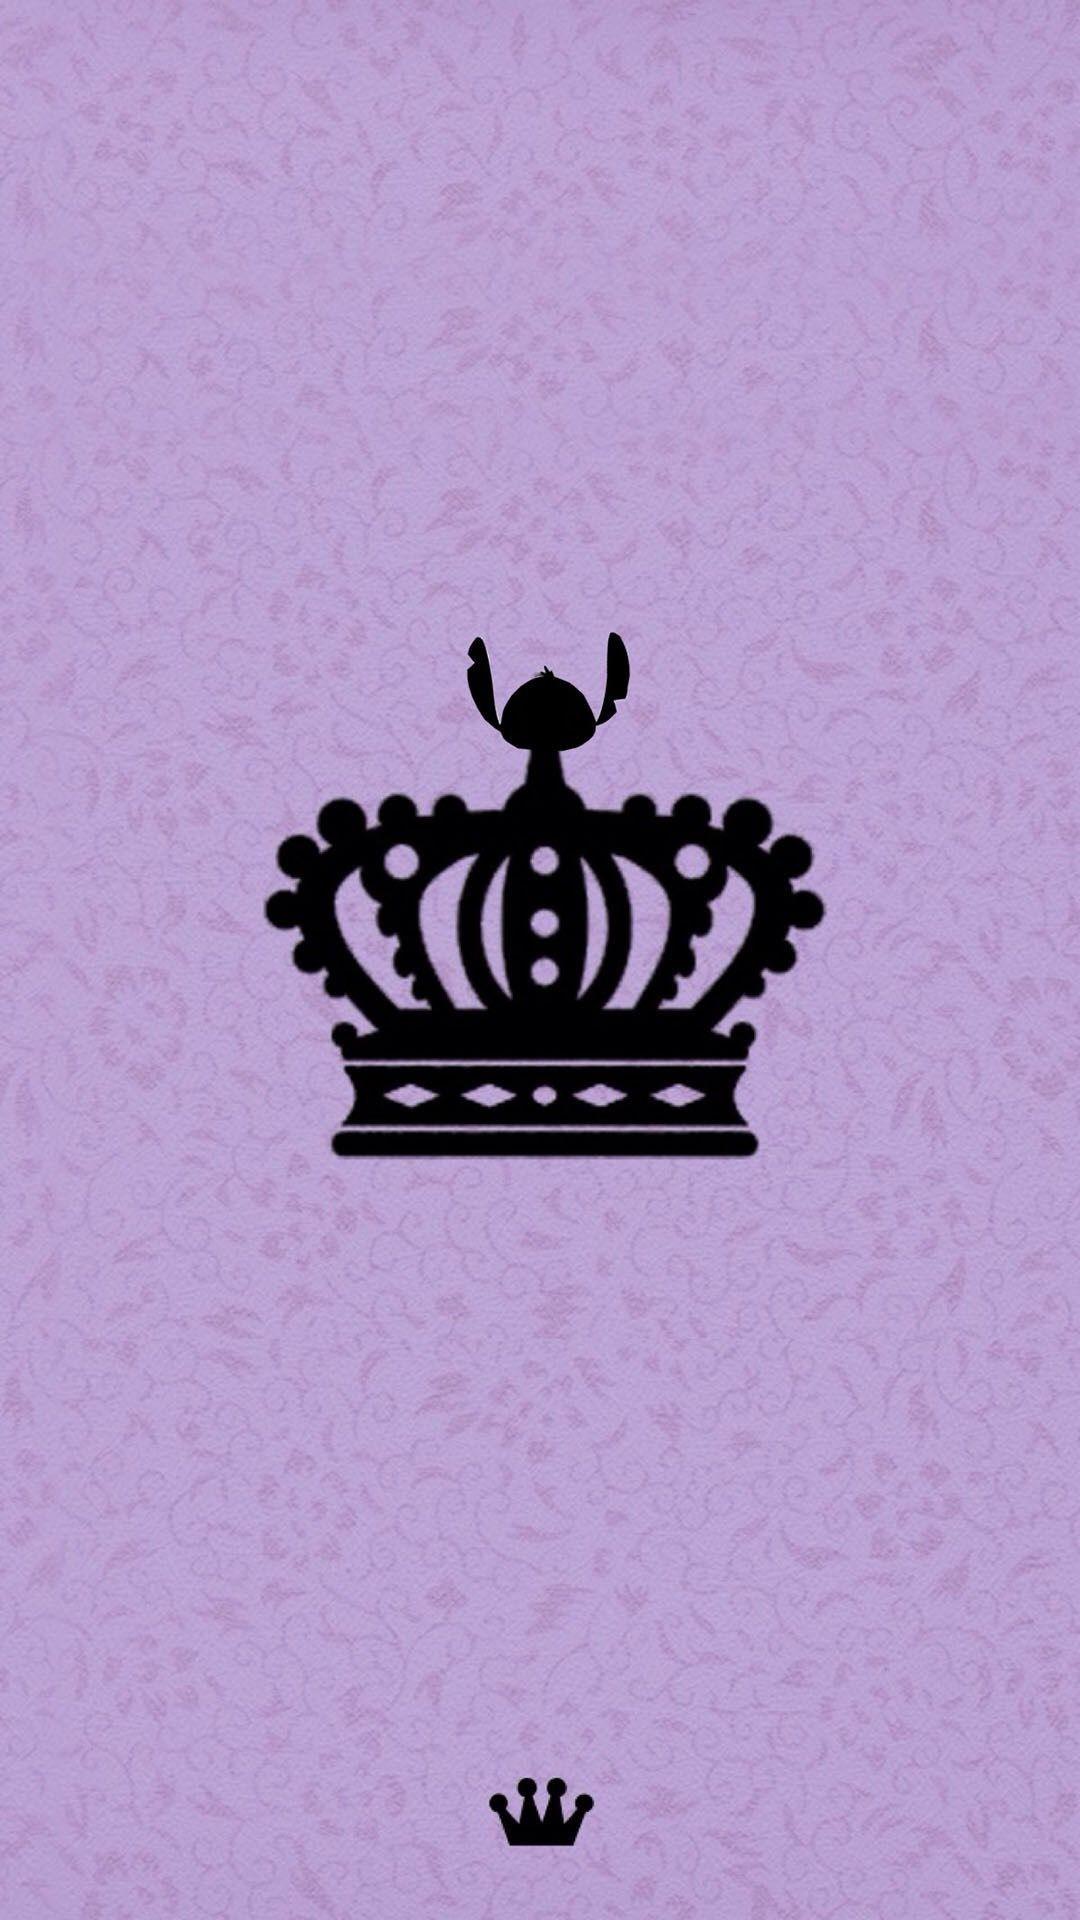 Princess Crown iPhone Wallpapers - Top Free Princess Crown iPhone ...